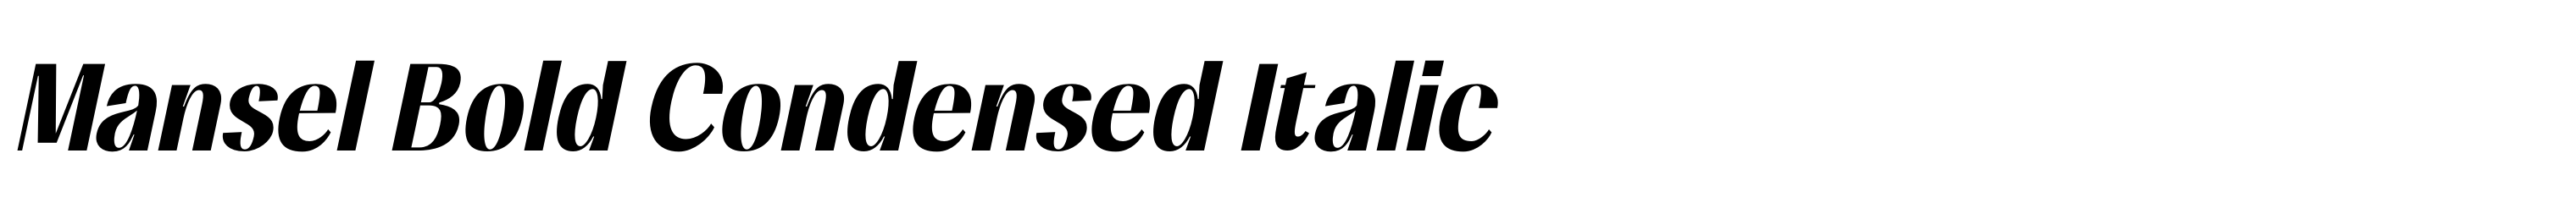 Mansel Bold Condensed Italic